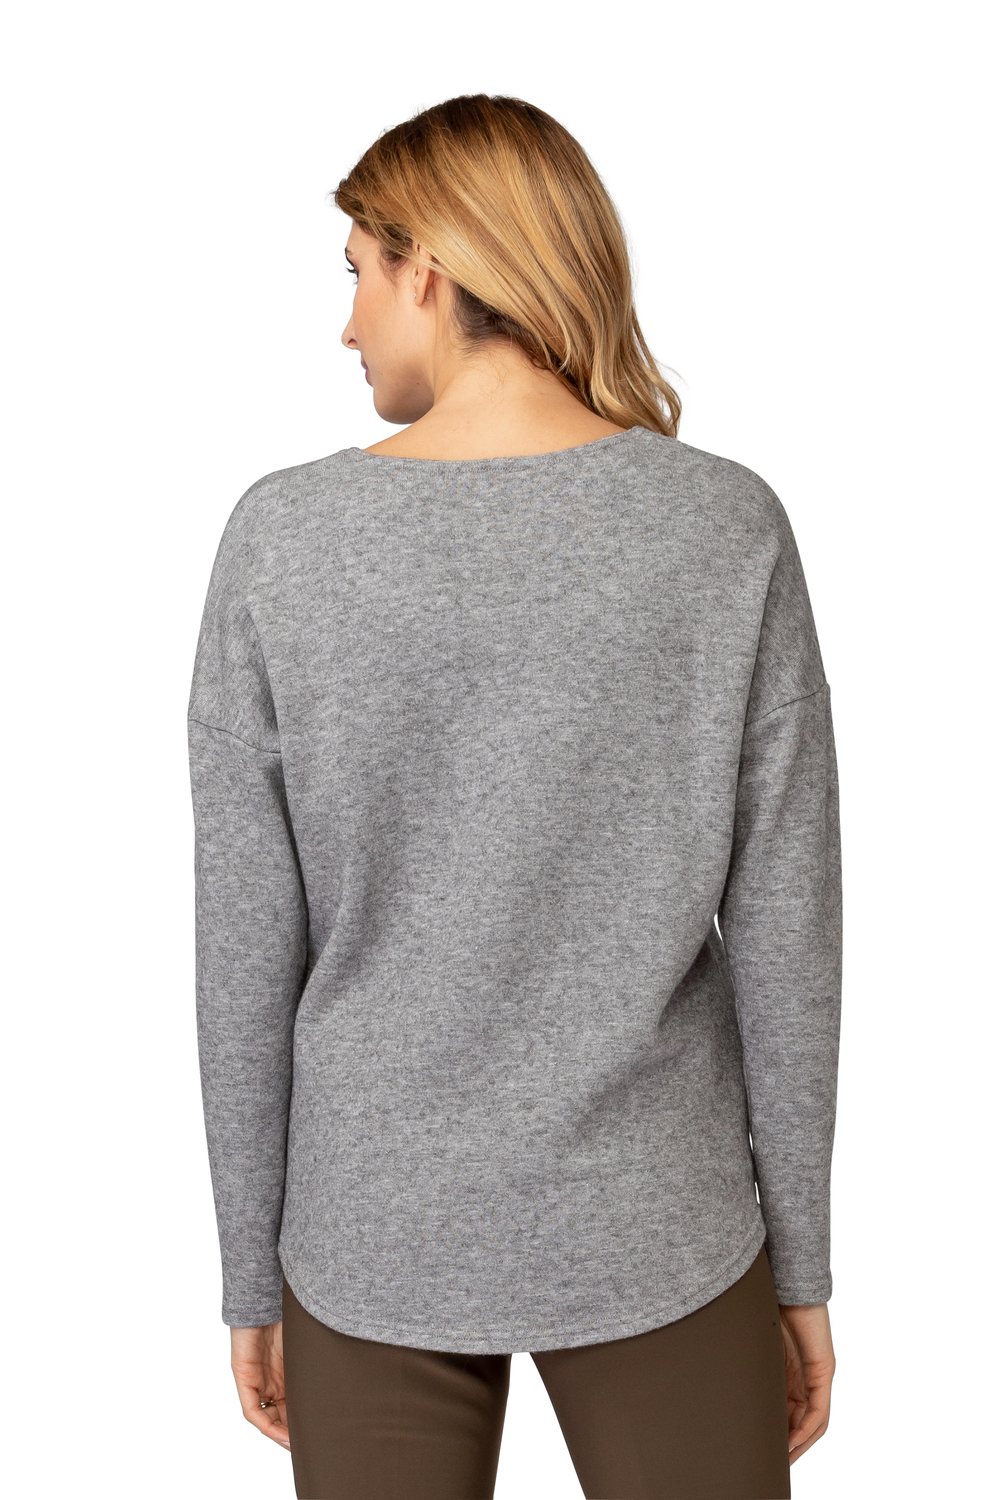 Joseph Ribkoff Sweater style 193472. Grey